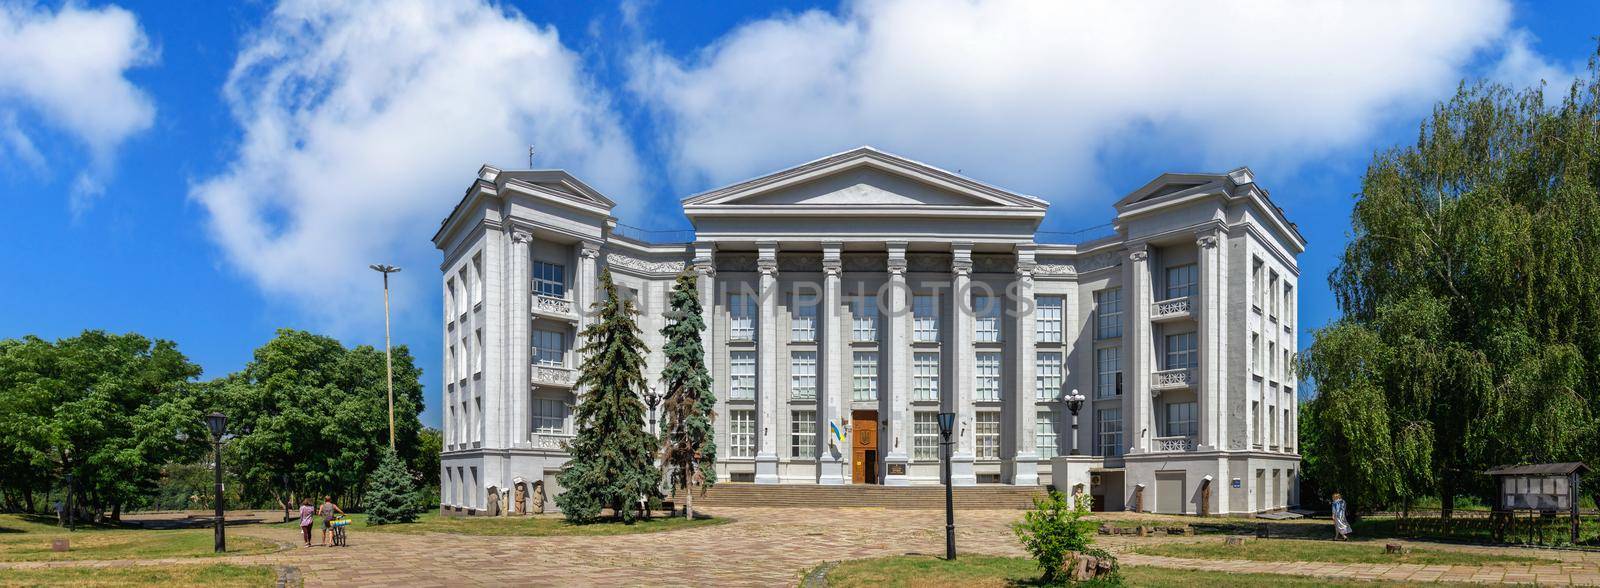 National Museum of the History of Ukraine in Kyiv, Ukraine by Multipedia